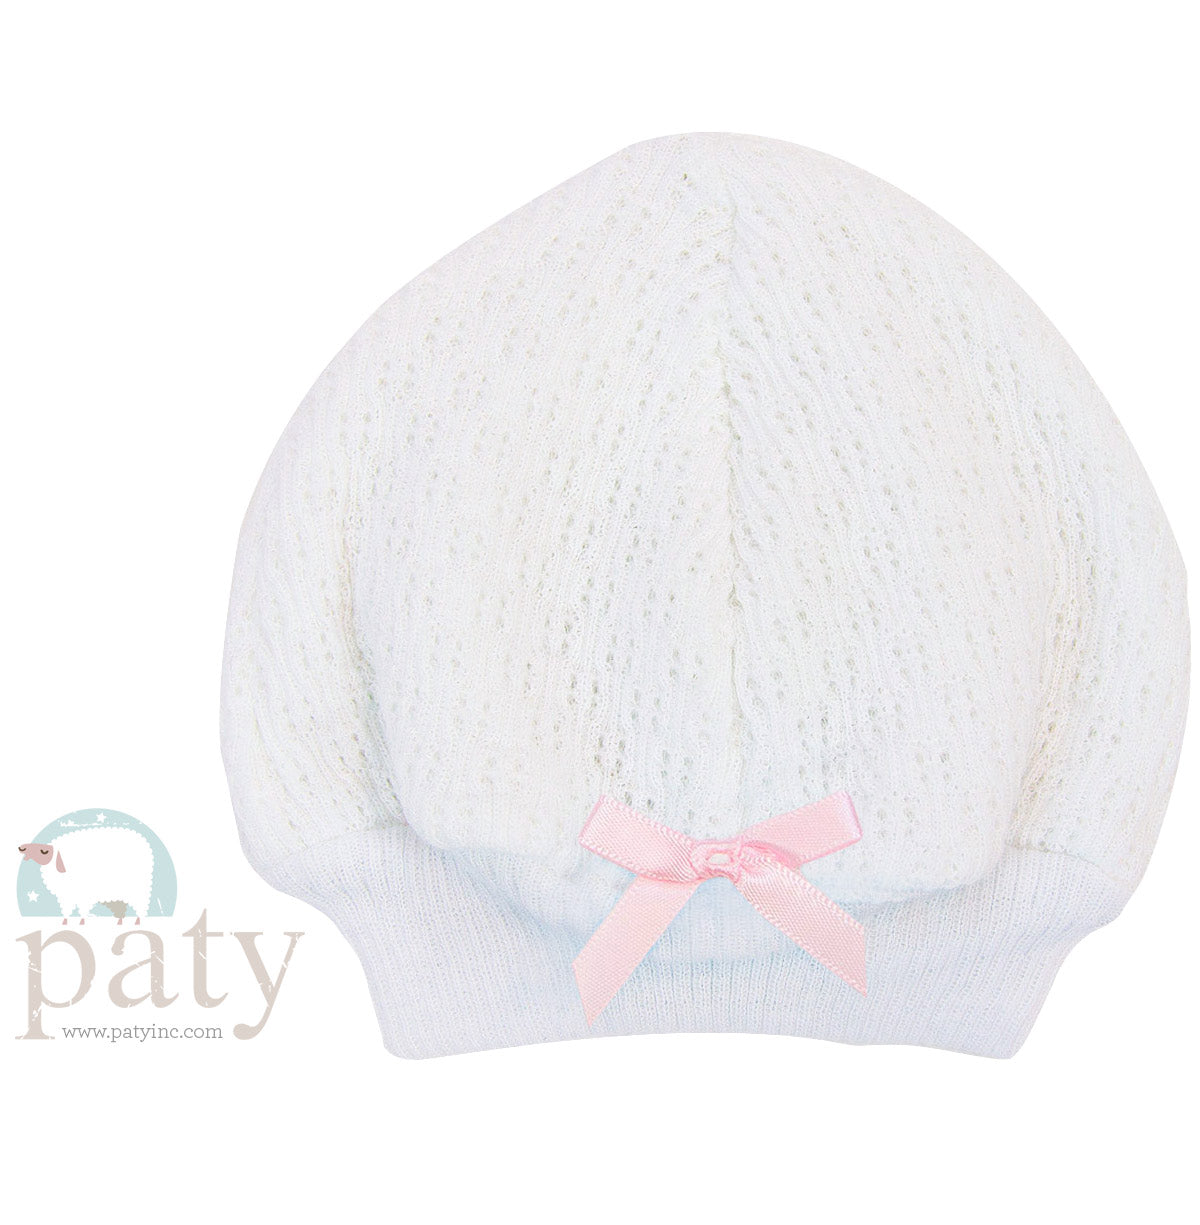 Paty White Beanie Cap (w bow) Pink